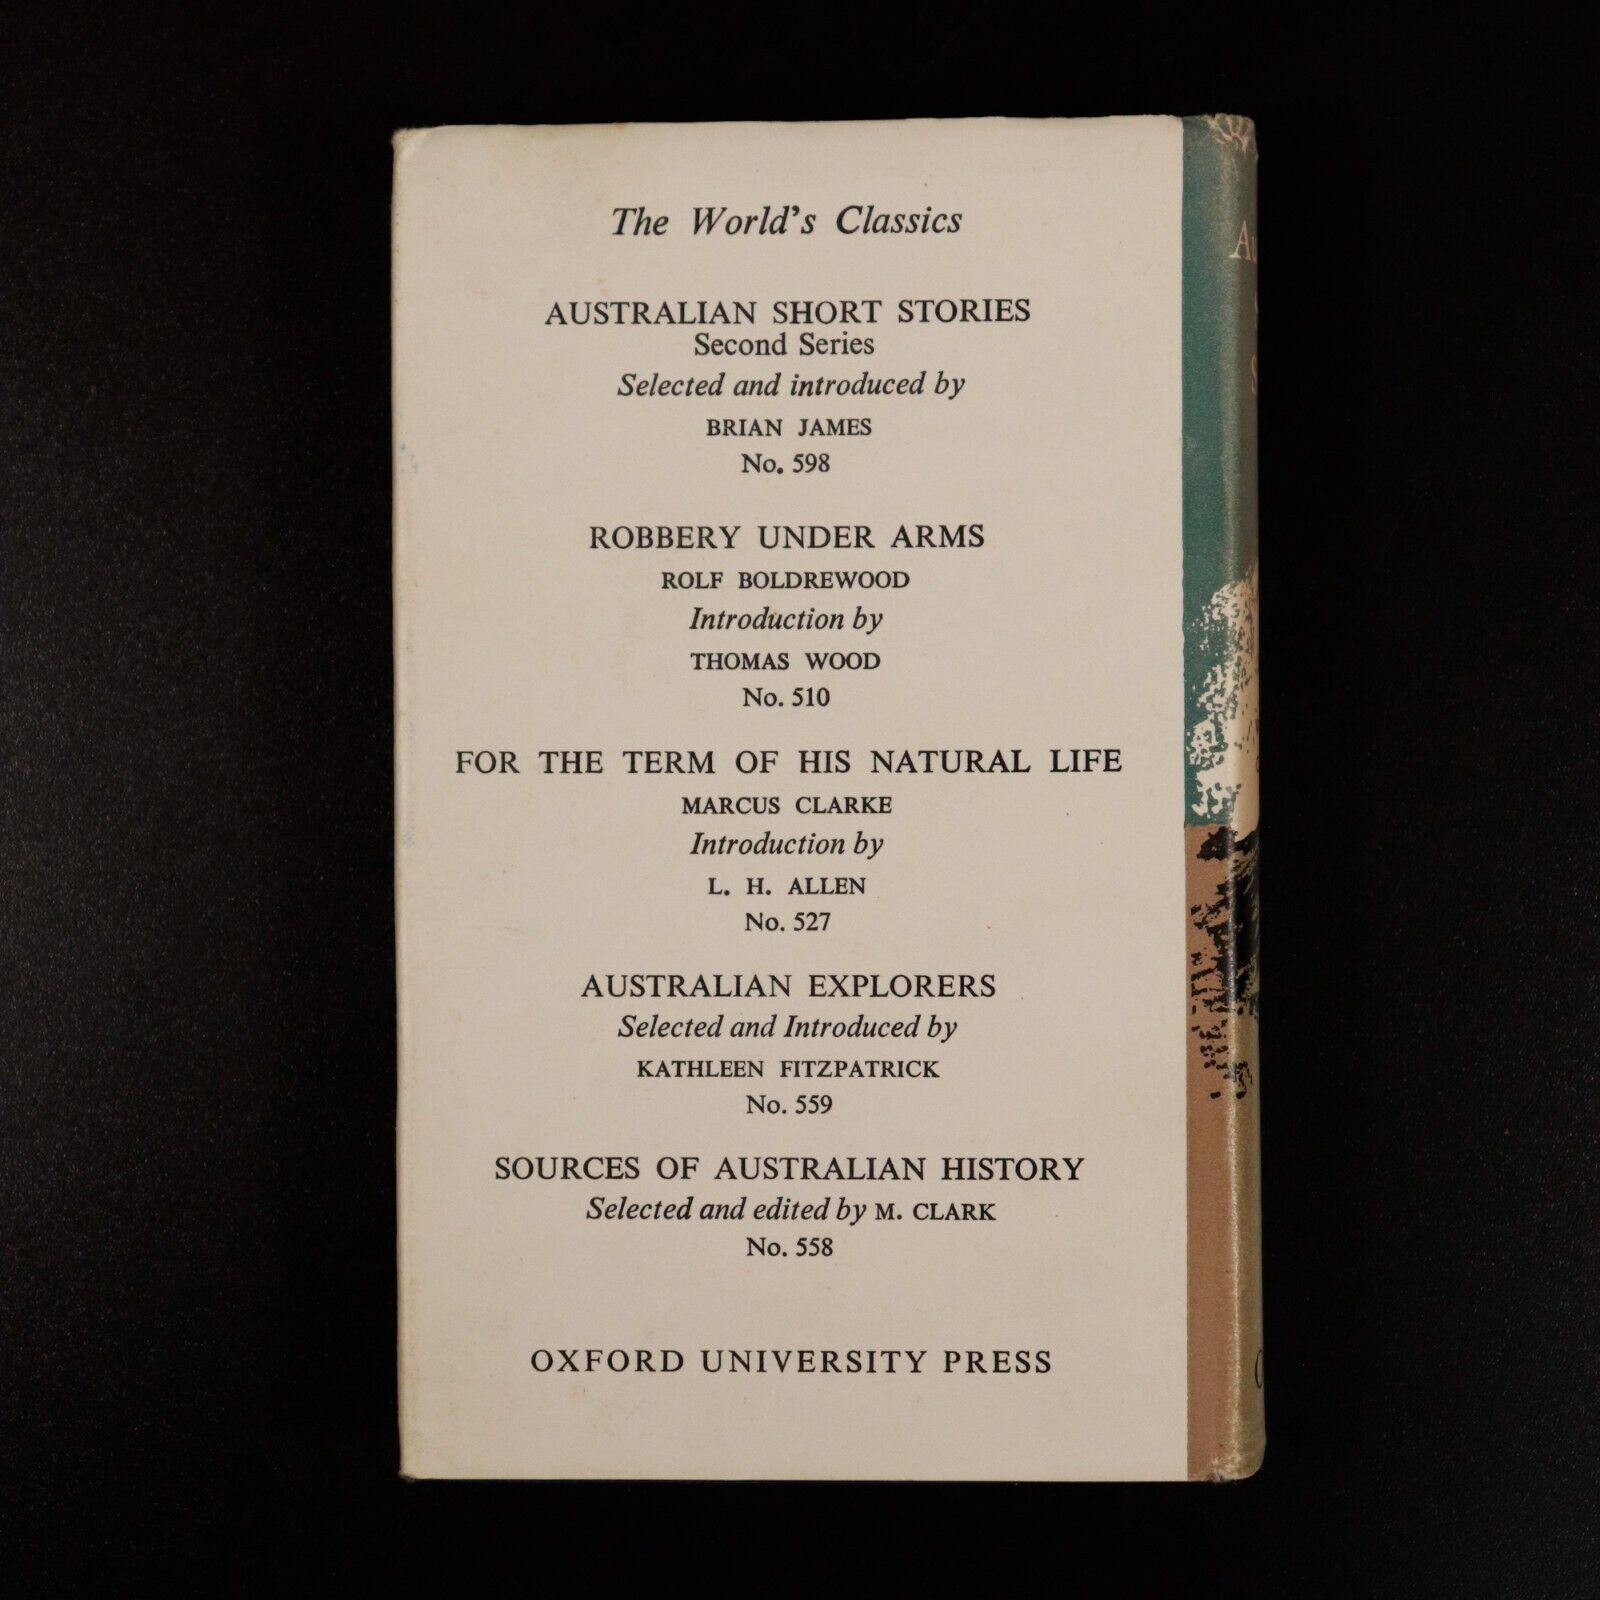 1965 Australian Short Stories Selected by Walter Murdoch Australian Fiction Book